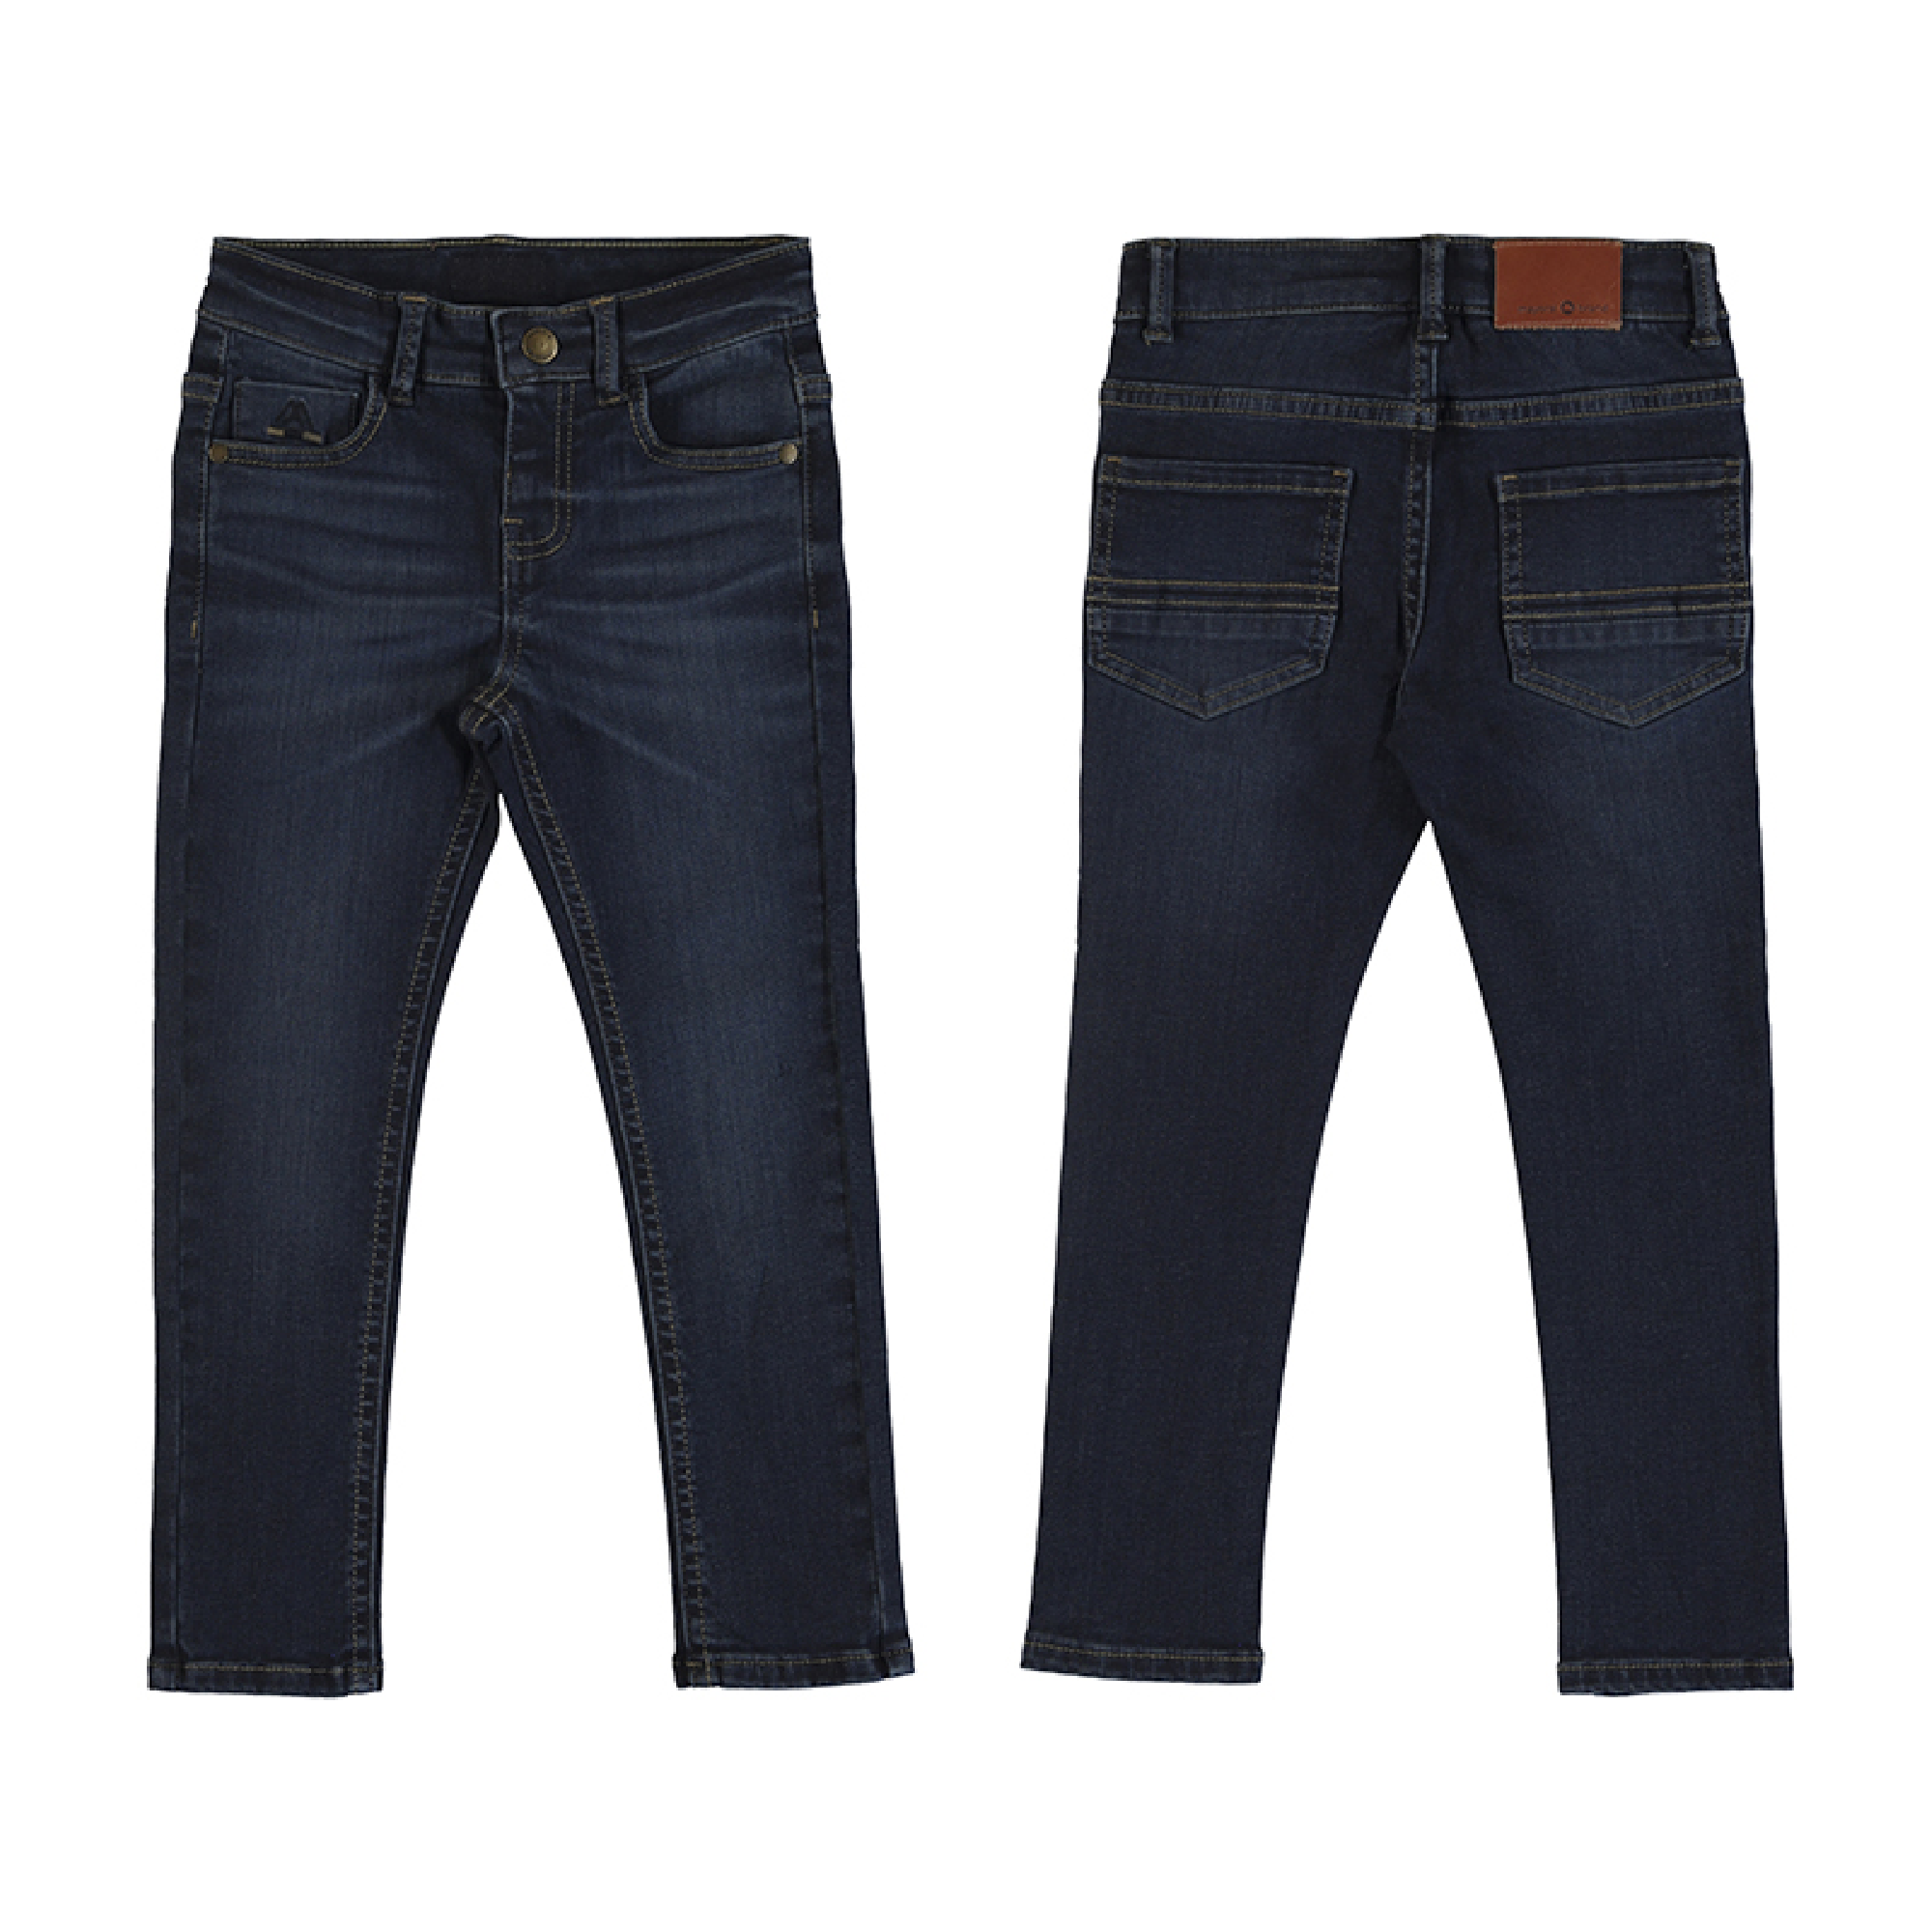 jongens Skinny Fit Jeans van Mayoral in de kleur Denim in maat 128.